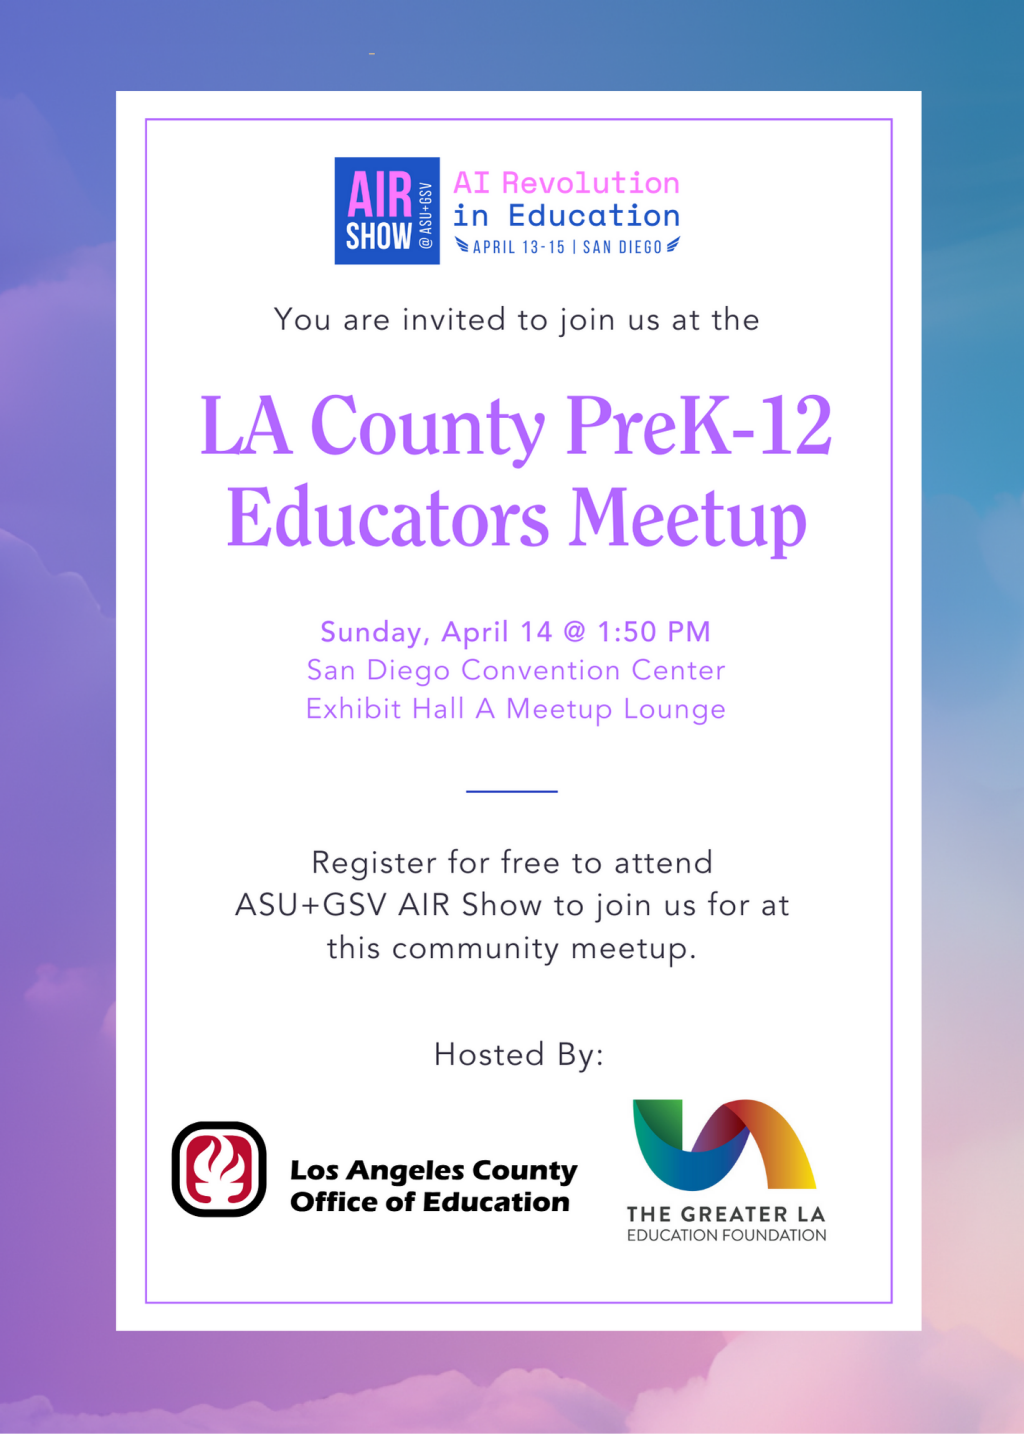 Information on LA County Meetup